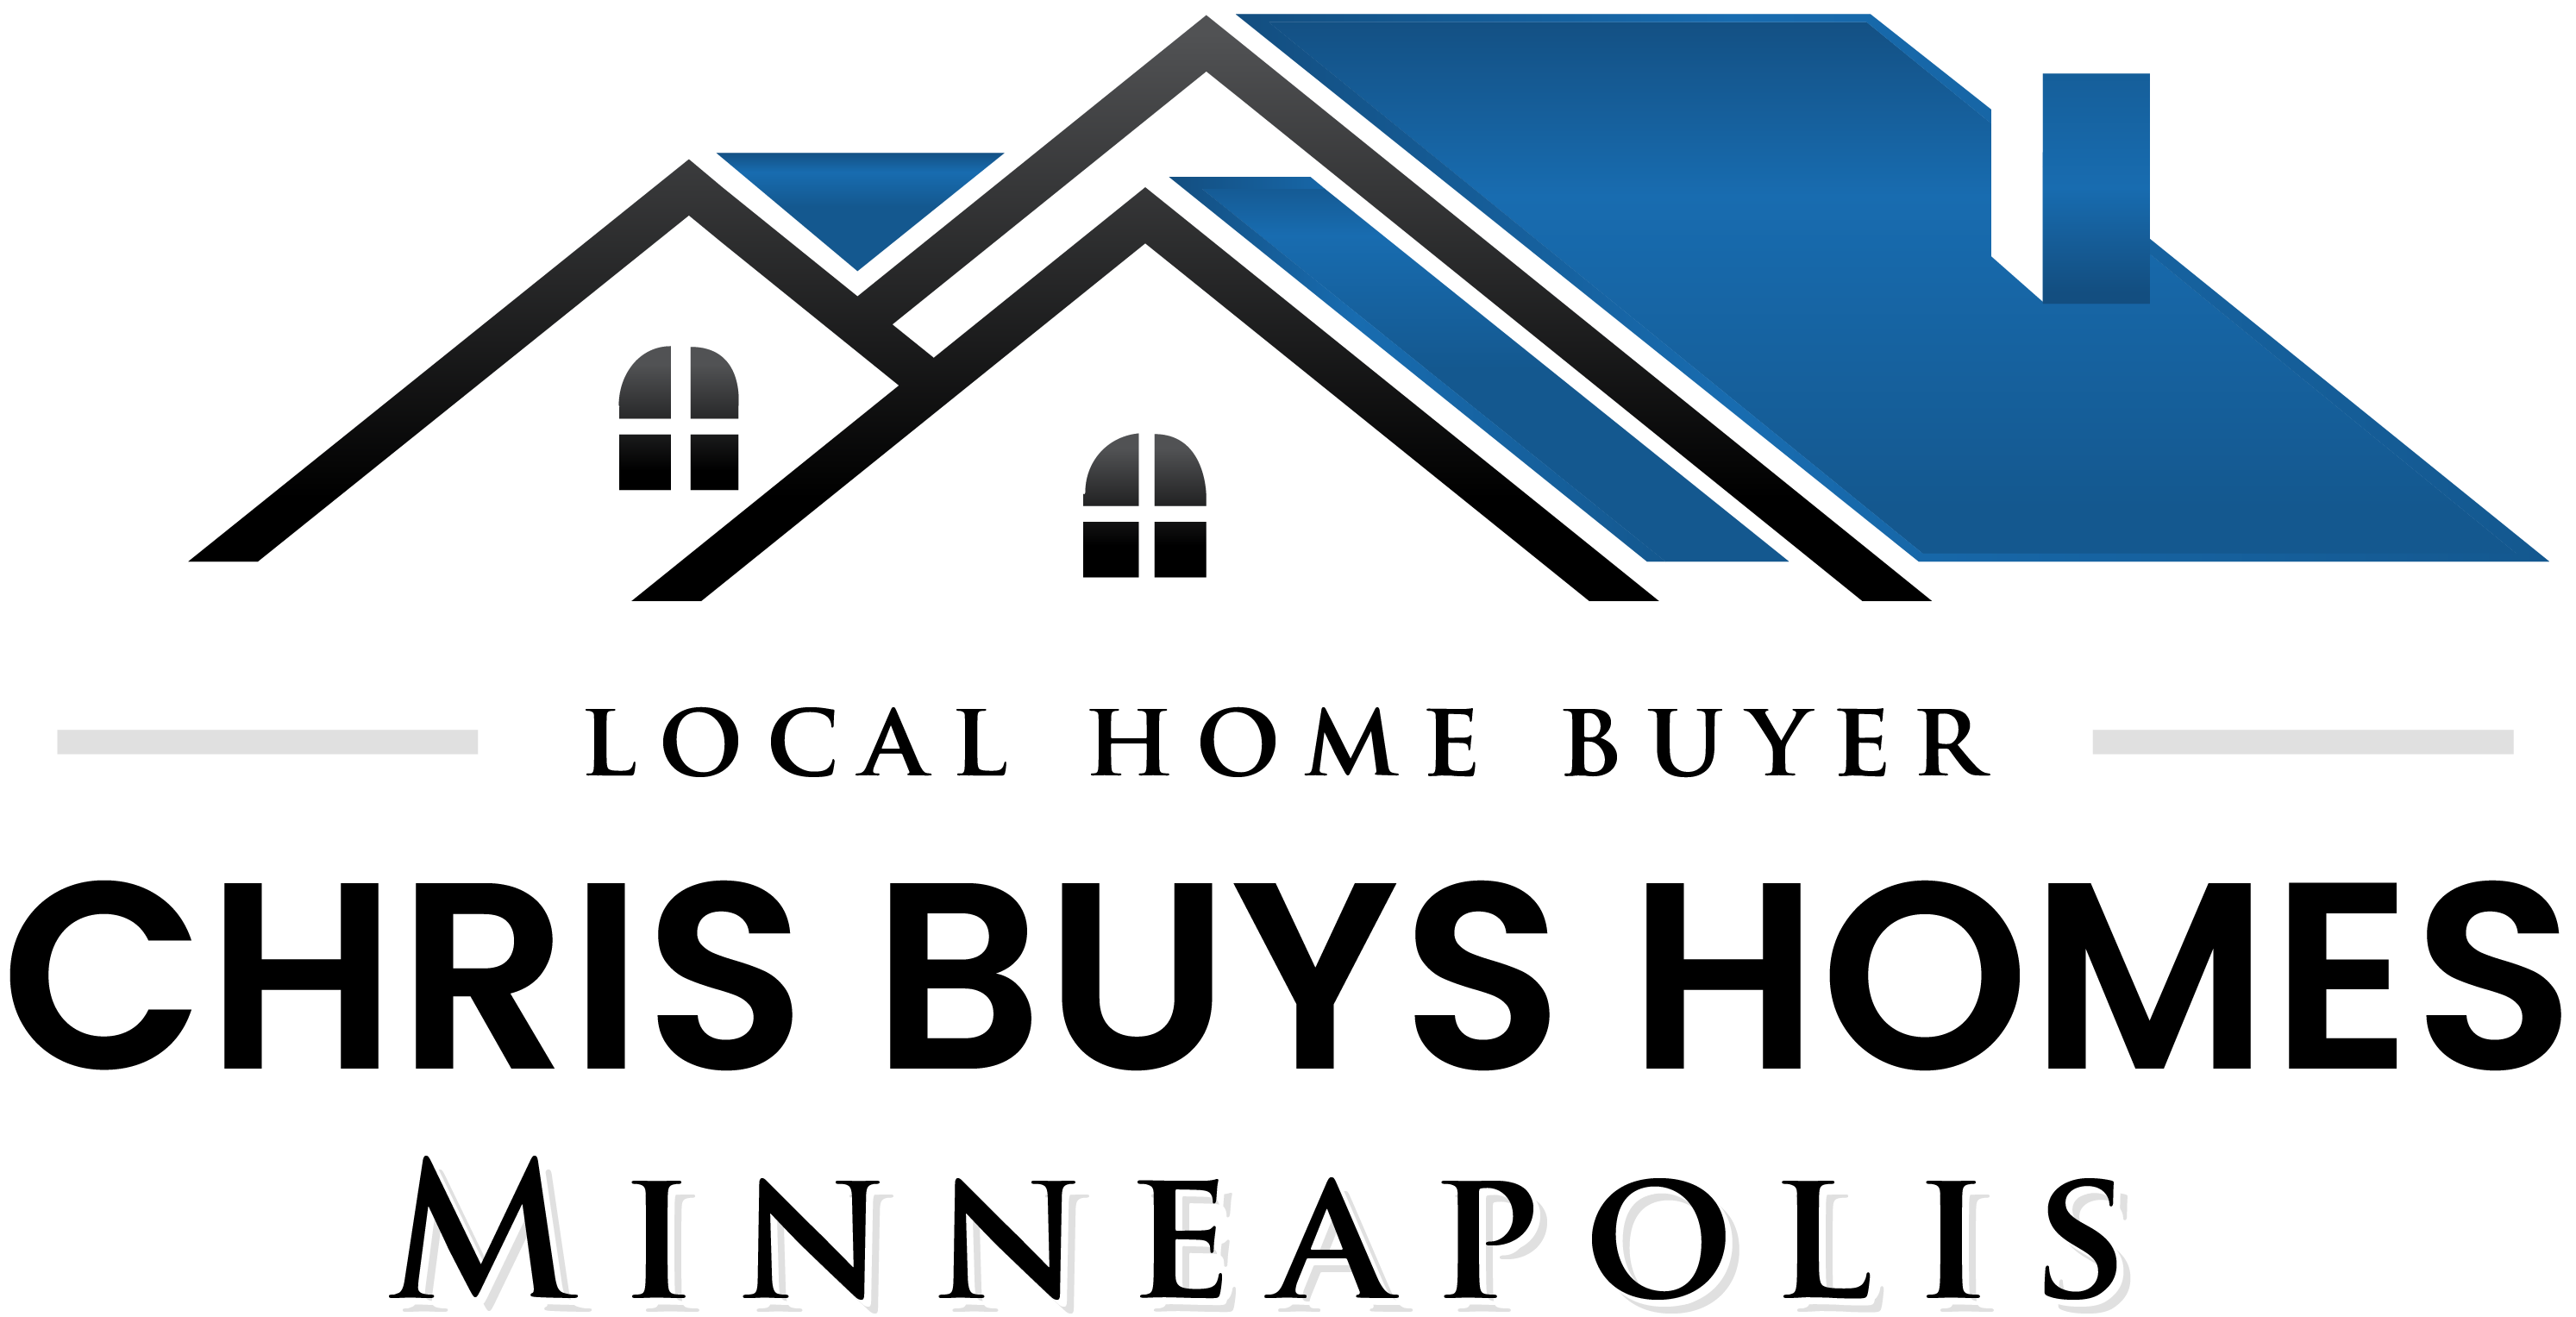 Chris Buys Homes in Minneapolis logo